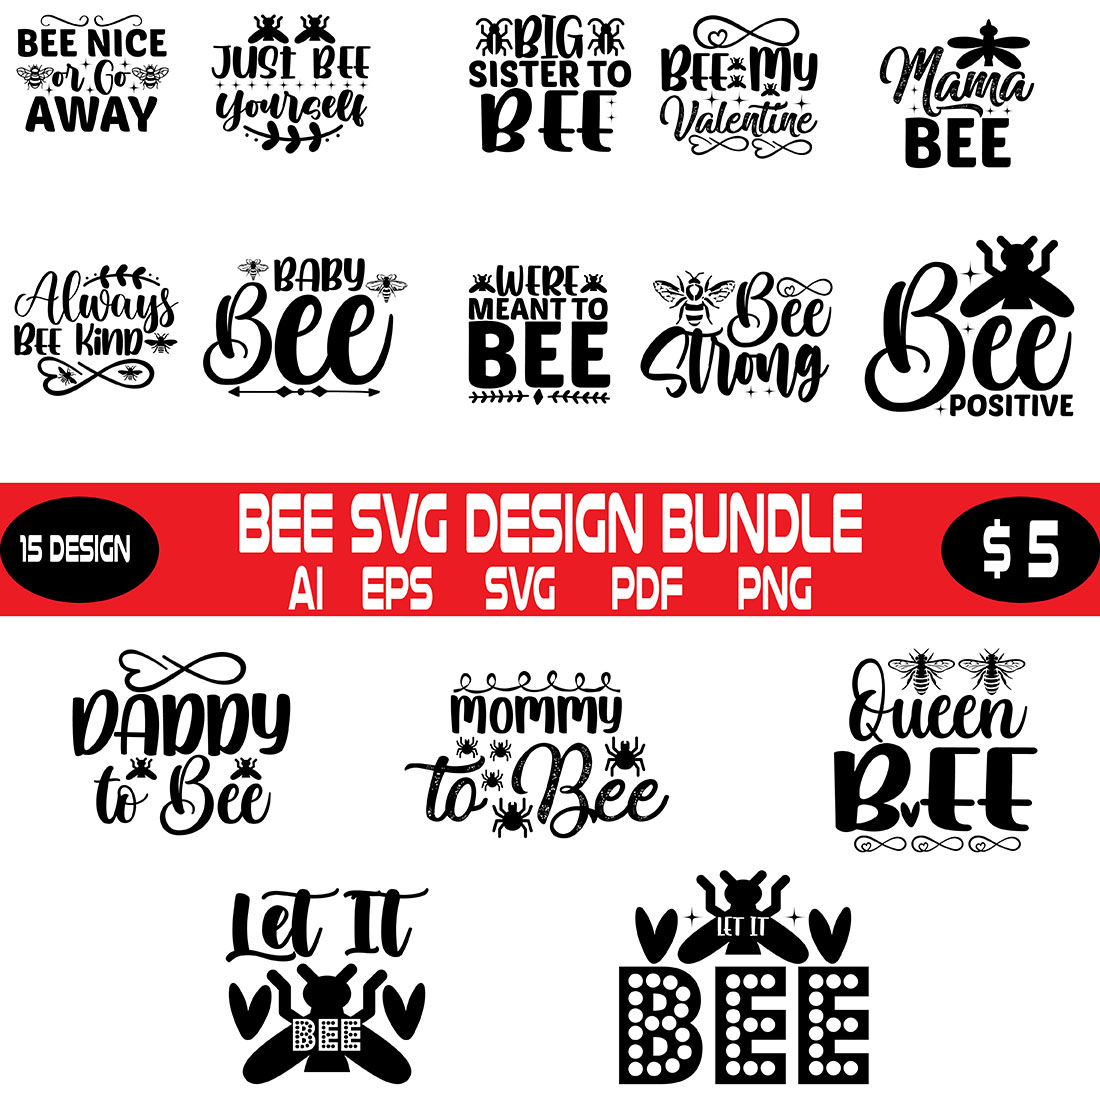 Bee svg design bundle.